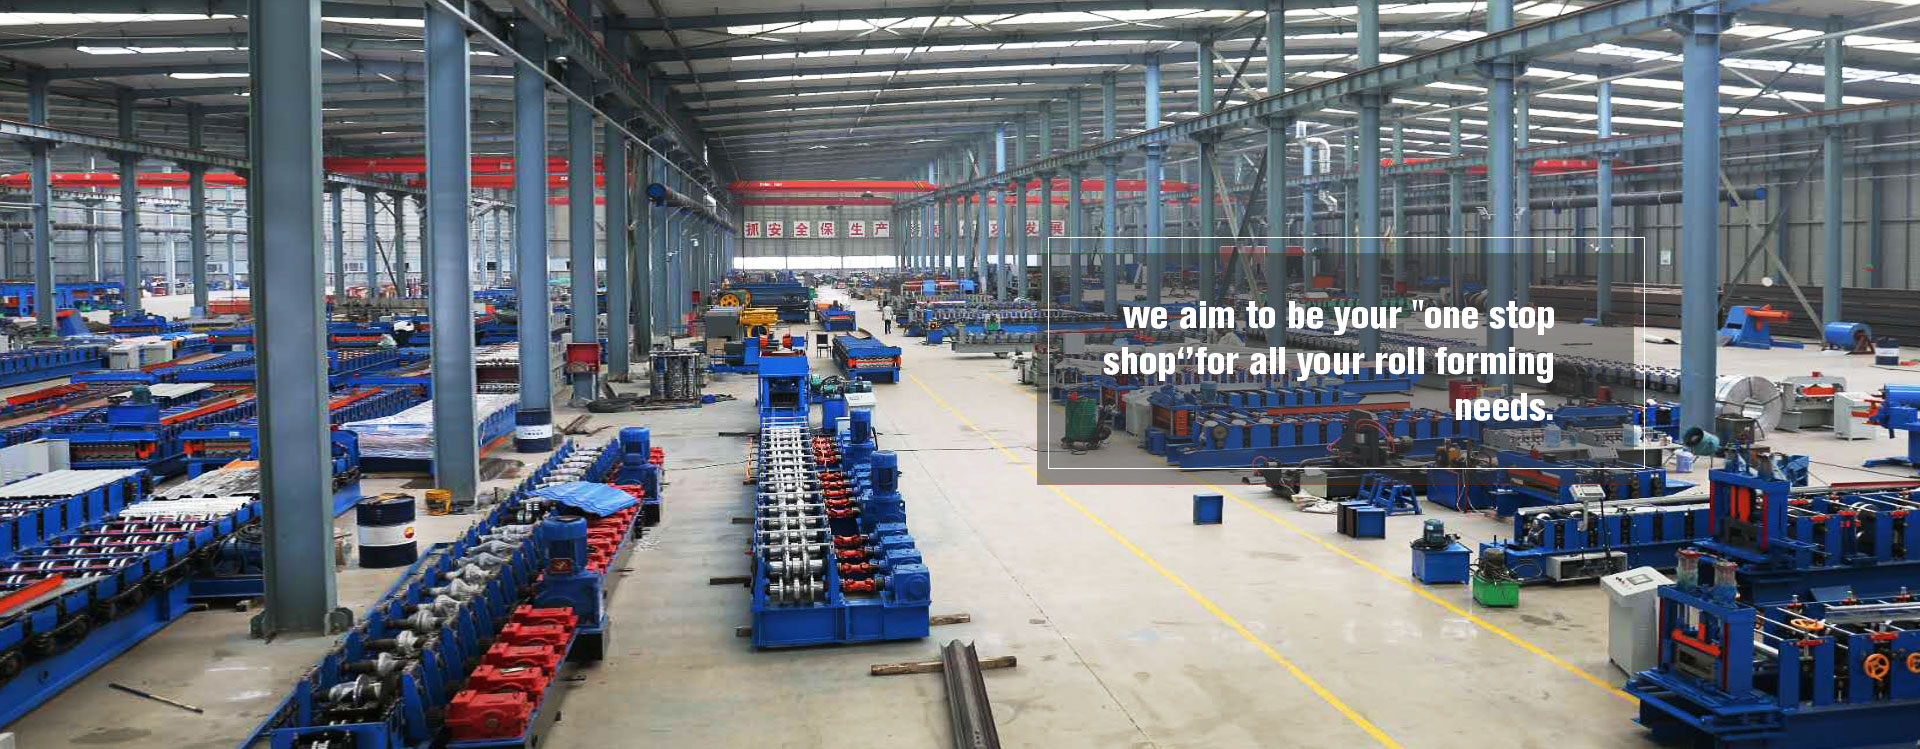 Botou Shengrui Roll Forming Machine Co., Ltd.